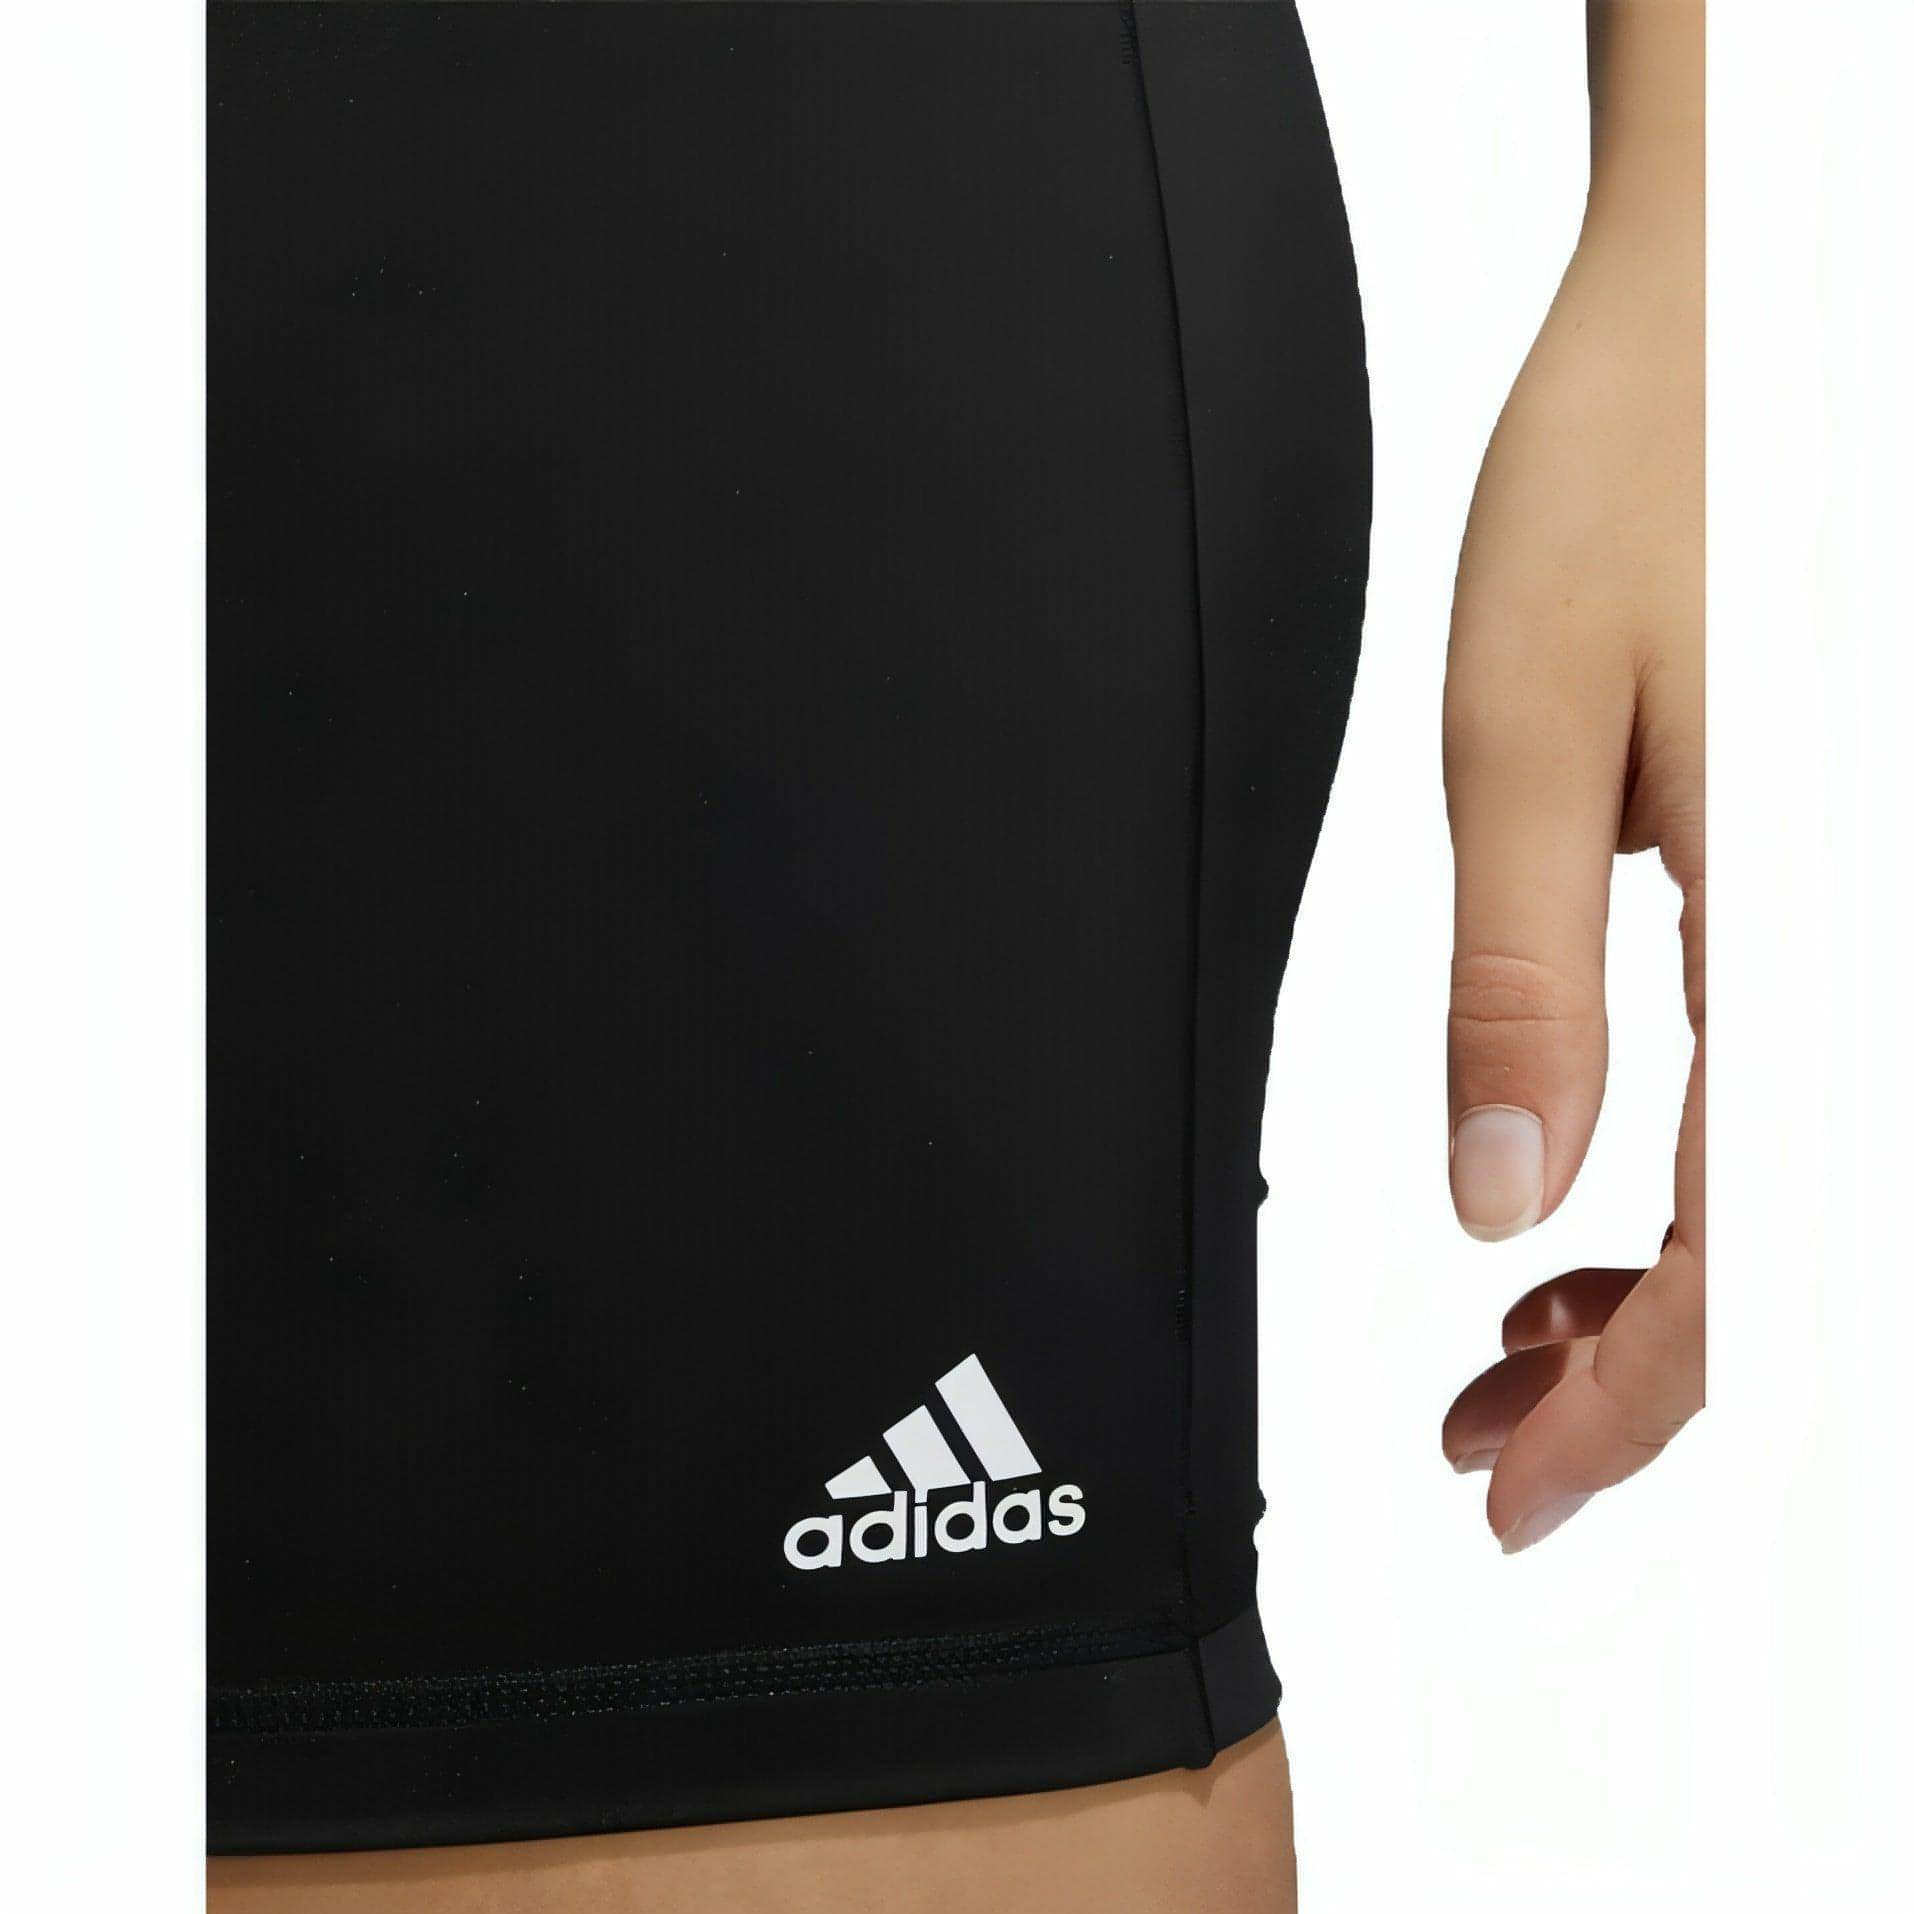 adidas Believe This 2.0 Womens Short Running Tights - Black